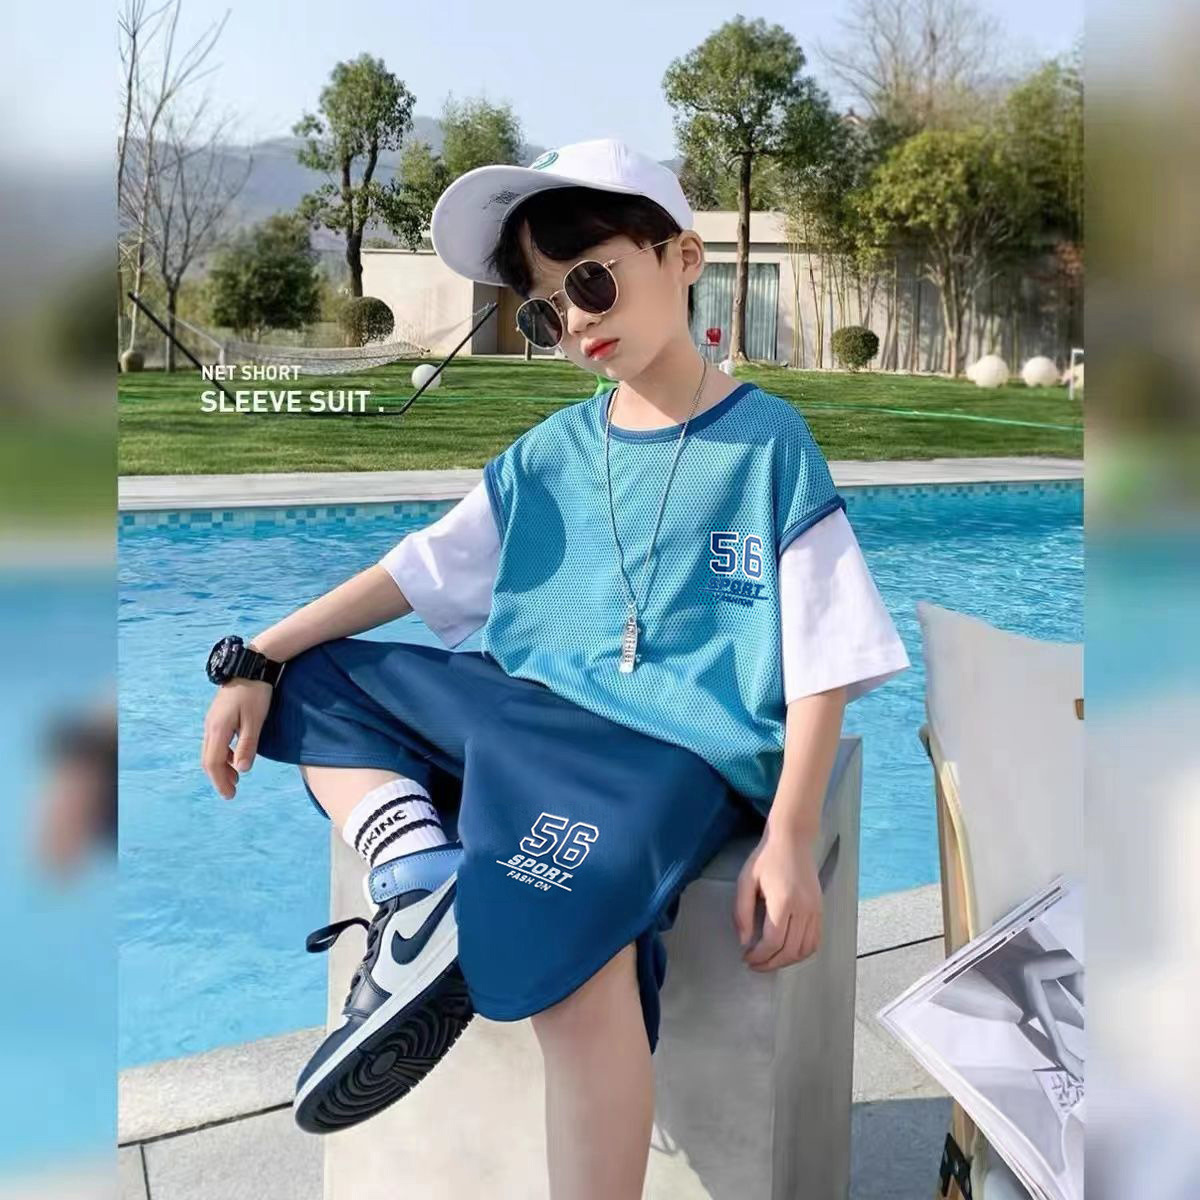 Boy's Sportswear Summer 2022 New Thin Medium and Big Children Quick-Drying T-shirt Shorts Two-Piece Children's Clothing Summer